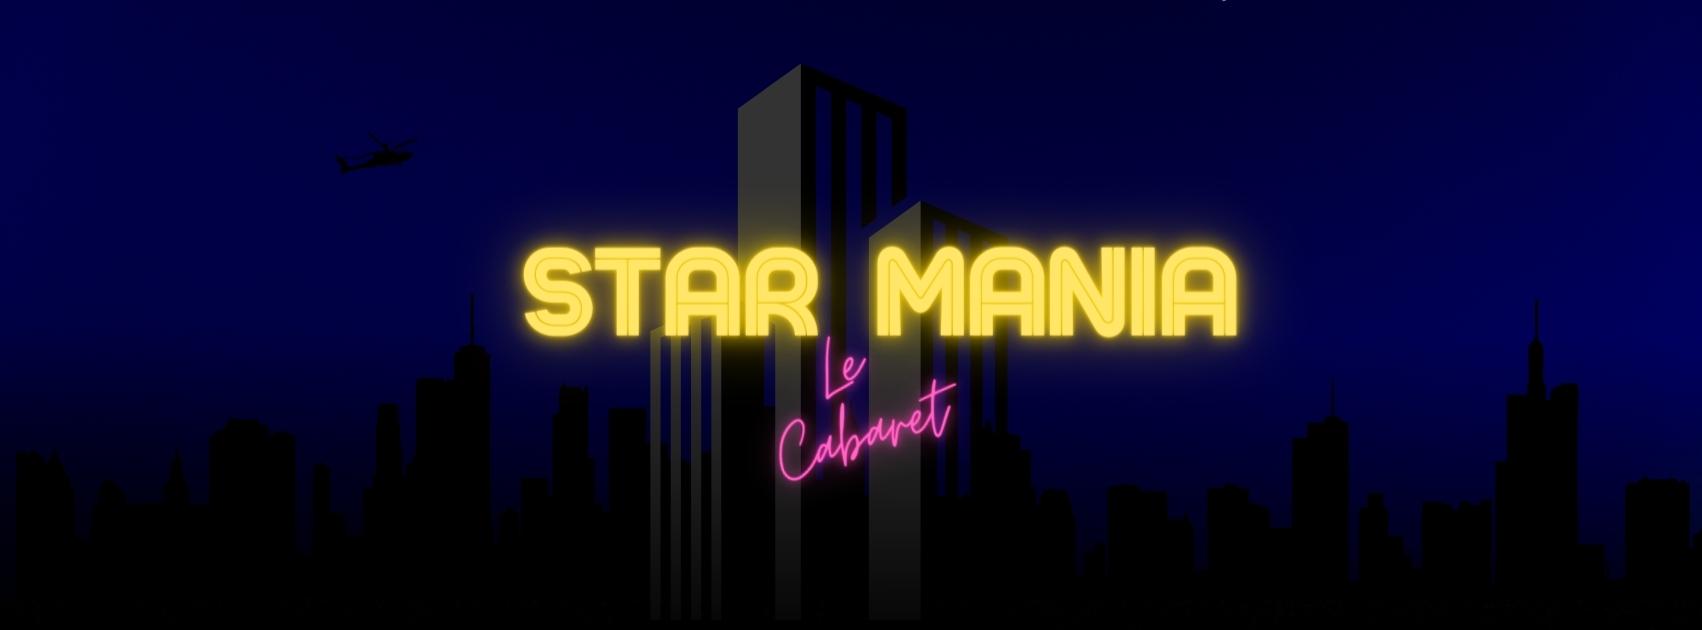 Star Mania : Le Cabaret